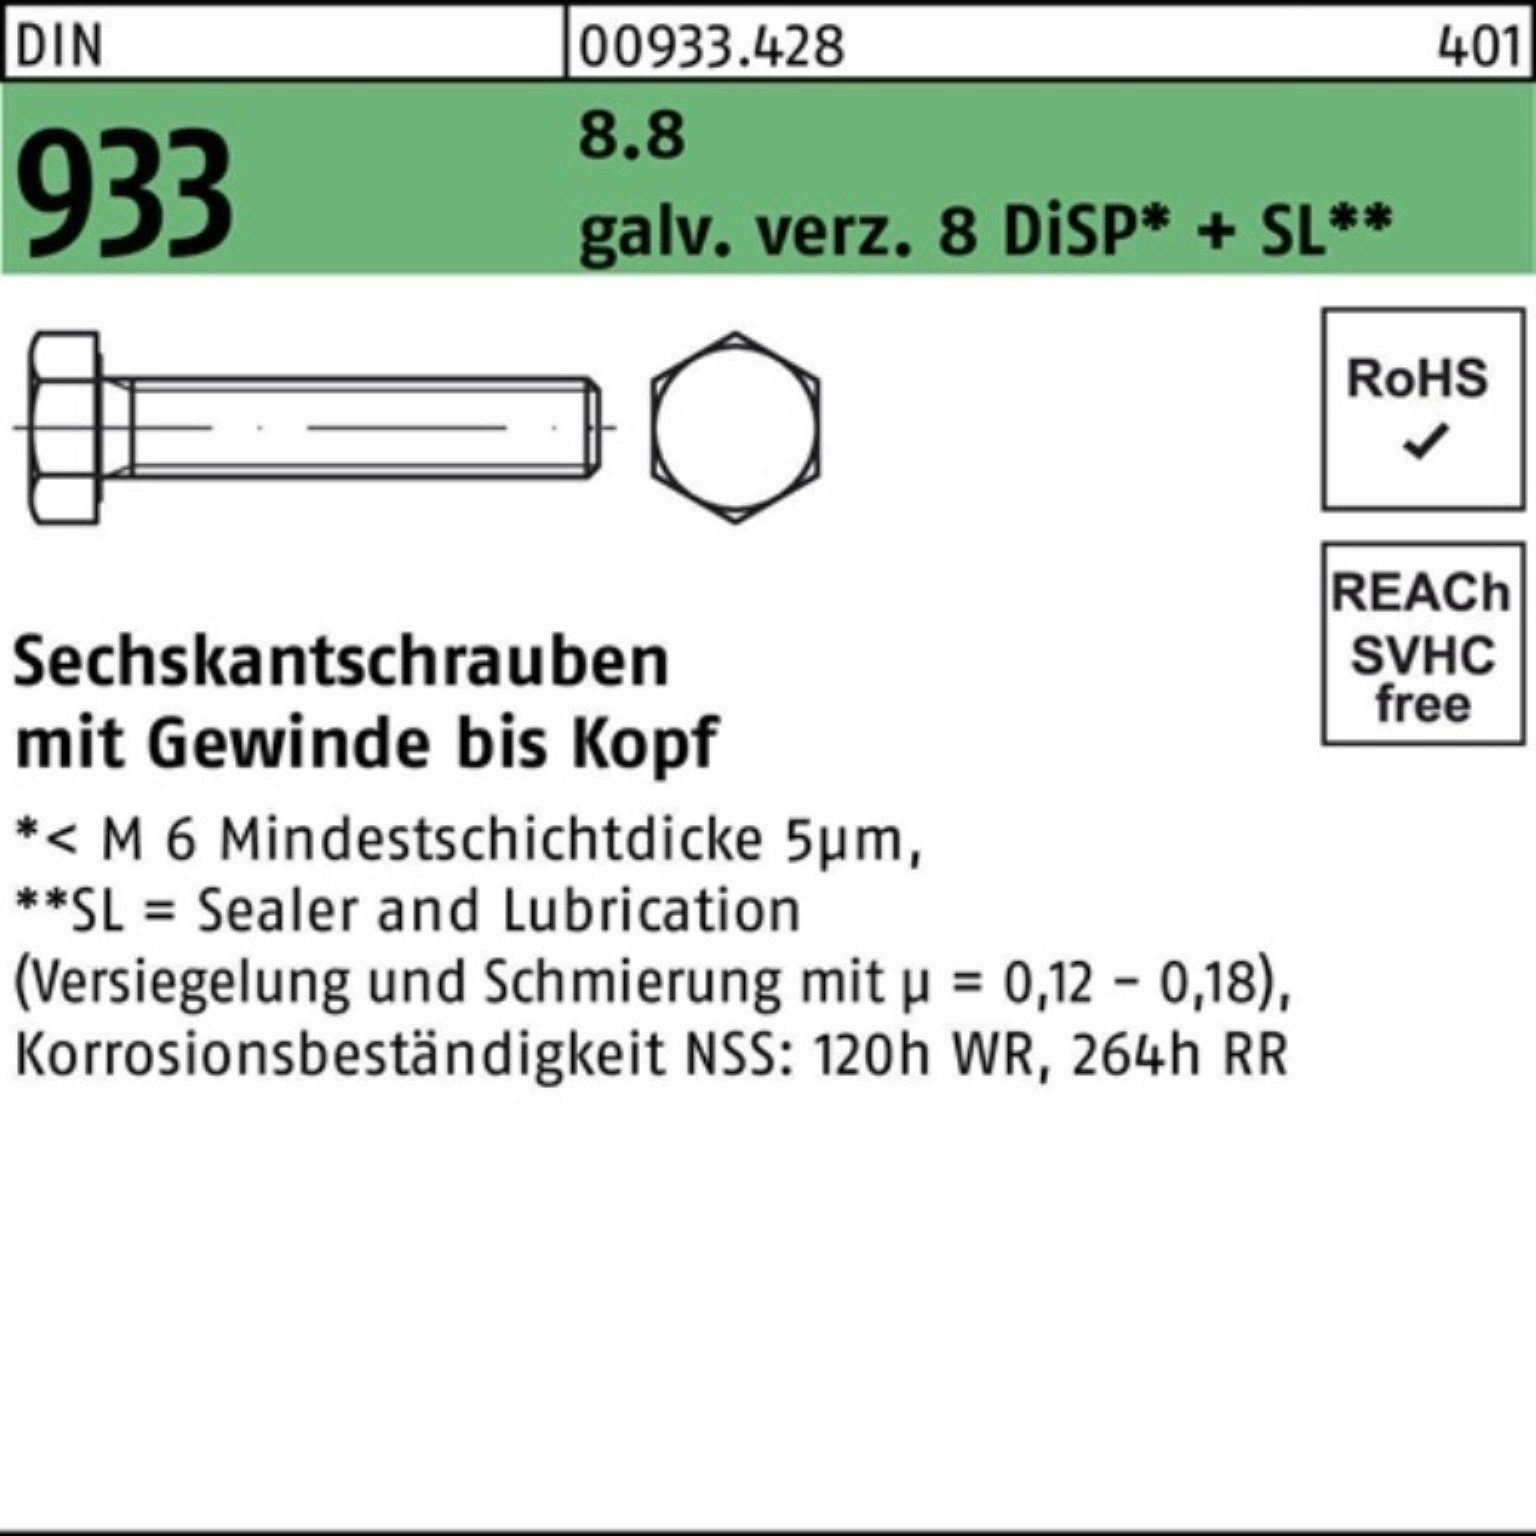 Reyher Sechskantschraube Sechskantschraube 14 8 Zn SL gal DiSP 933 M8x + DIN VG 8.8 Pack 200er